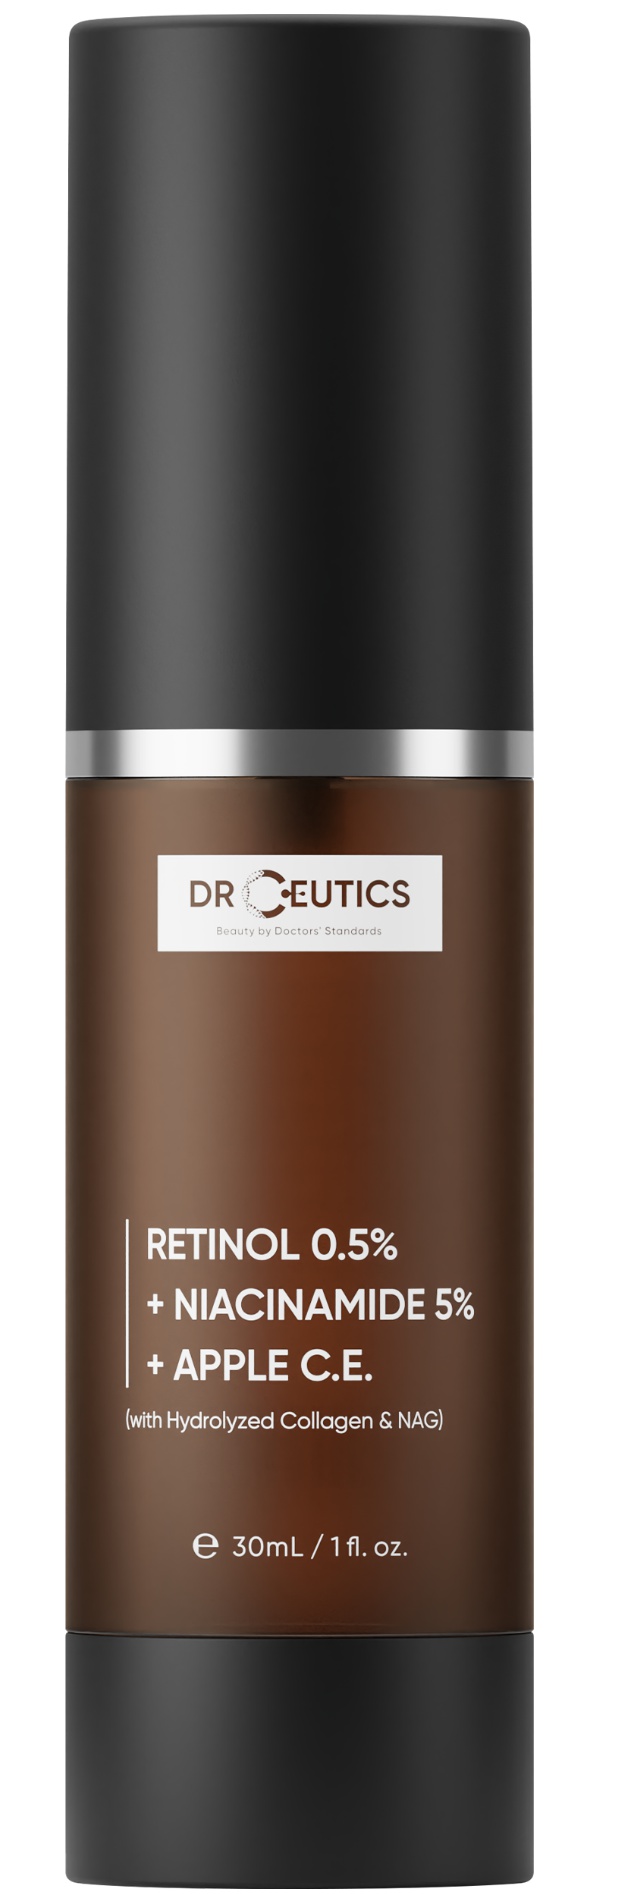 DrCeutics Retinol 0.5% + Niacinamide 5% + Apple C.E.